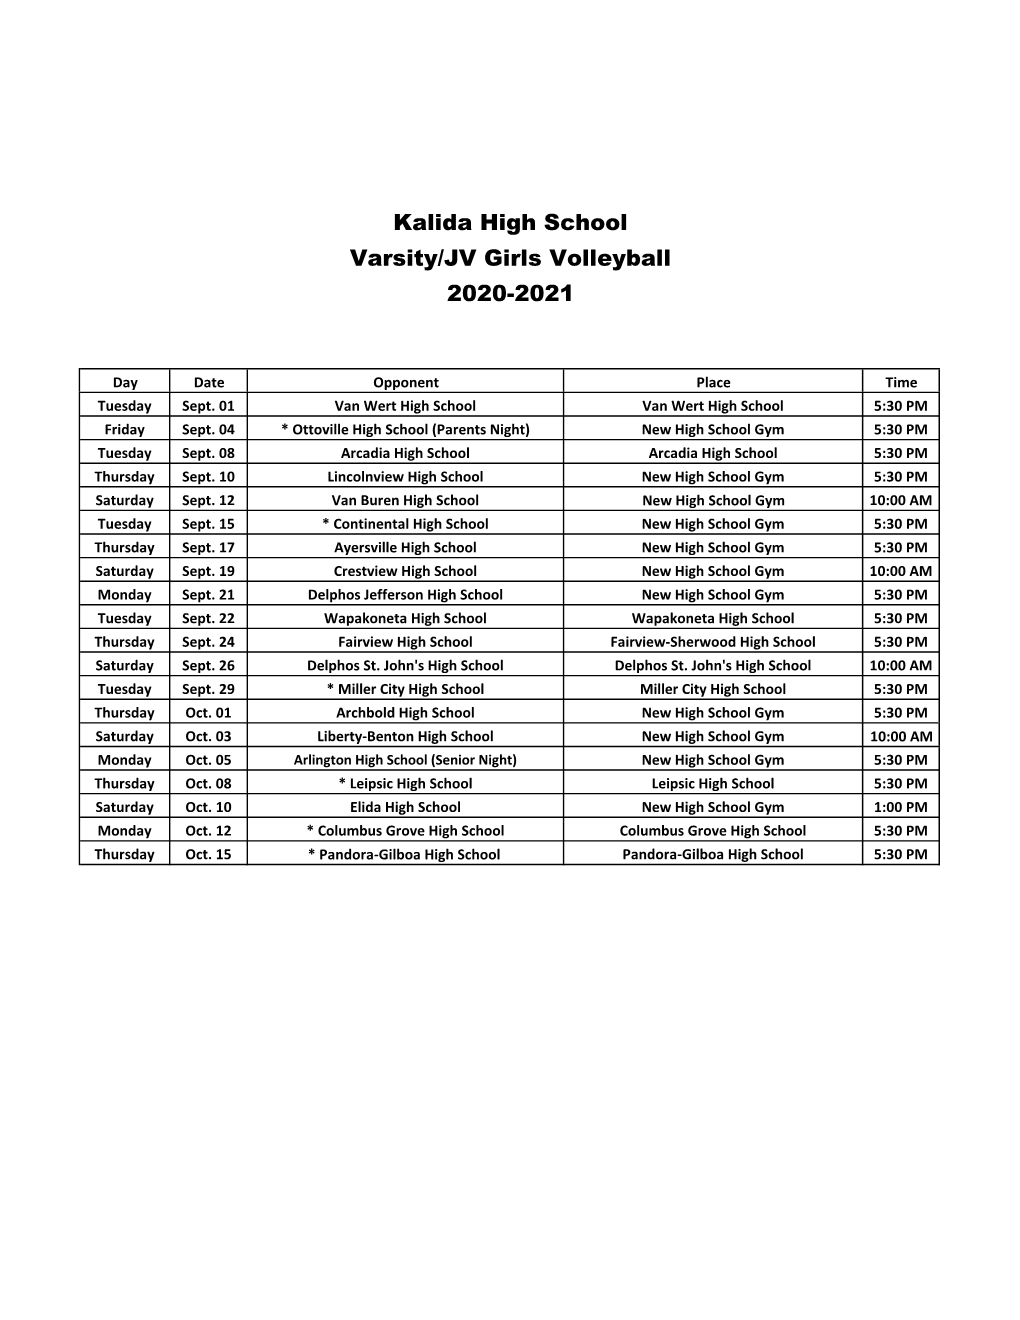 Kalida High School Varsity/JV Girls Volleyball 2020-2021